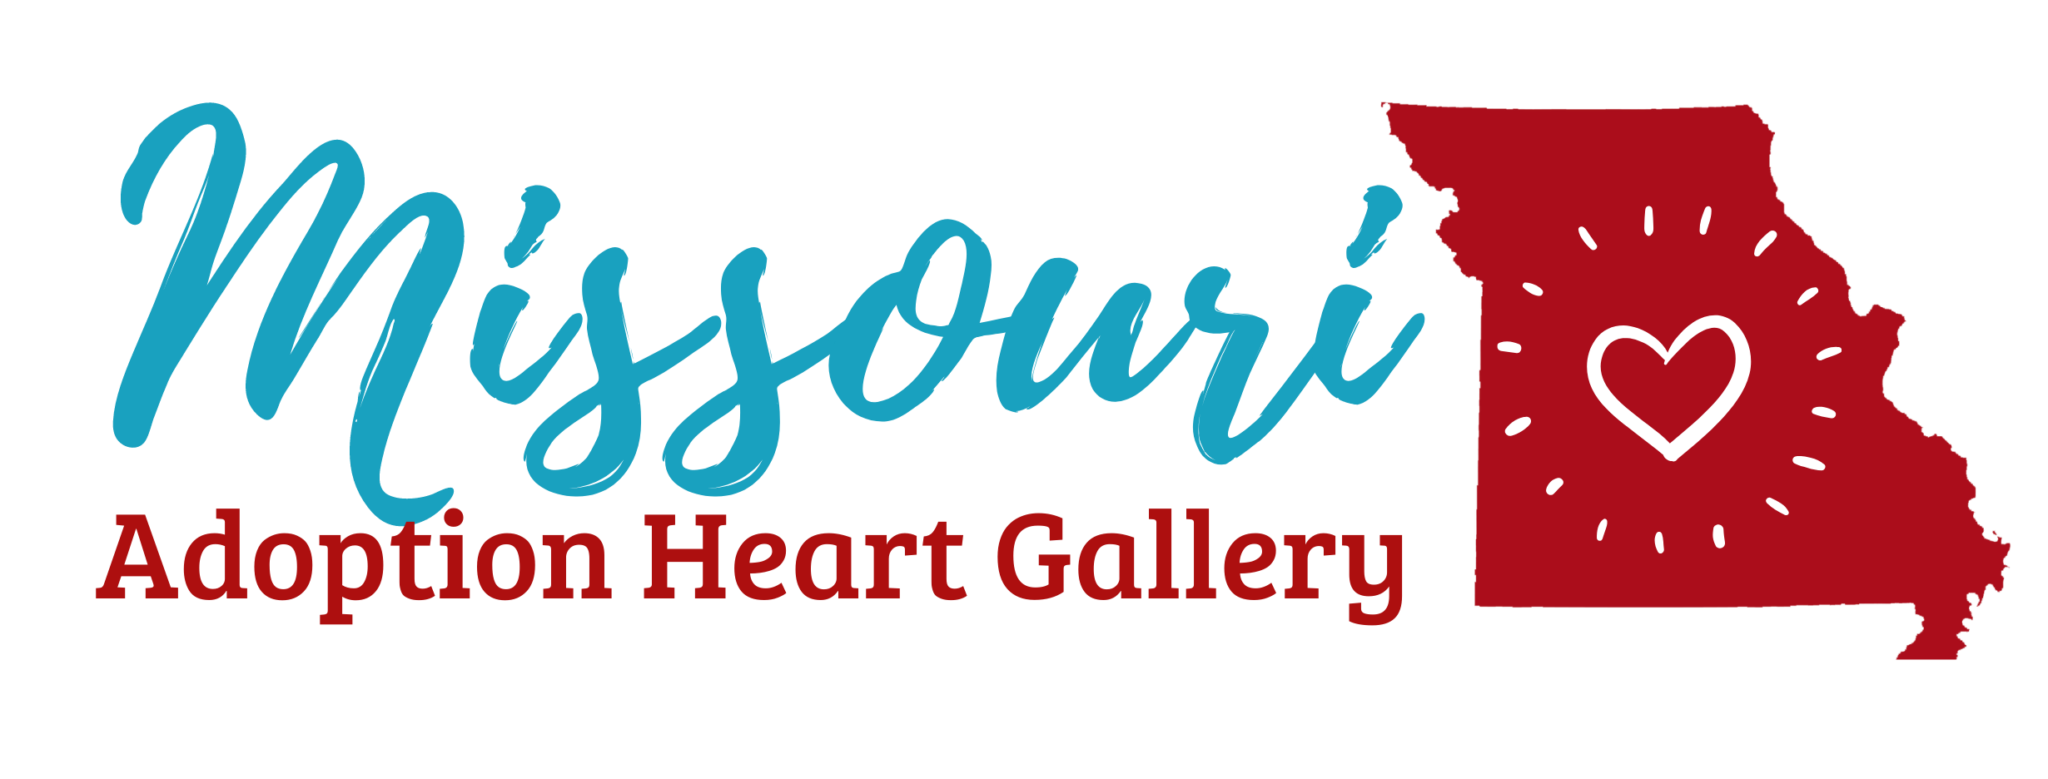 Missouri Heart Gallery Logo